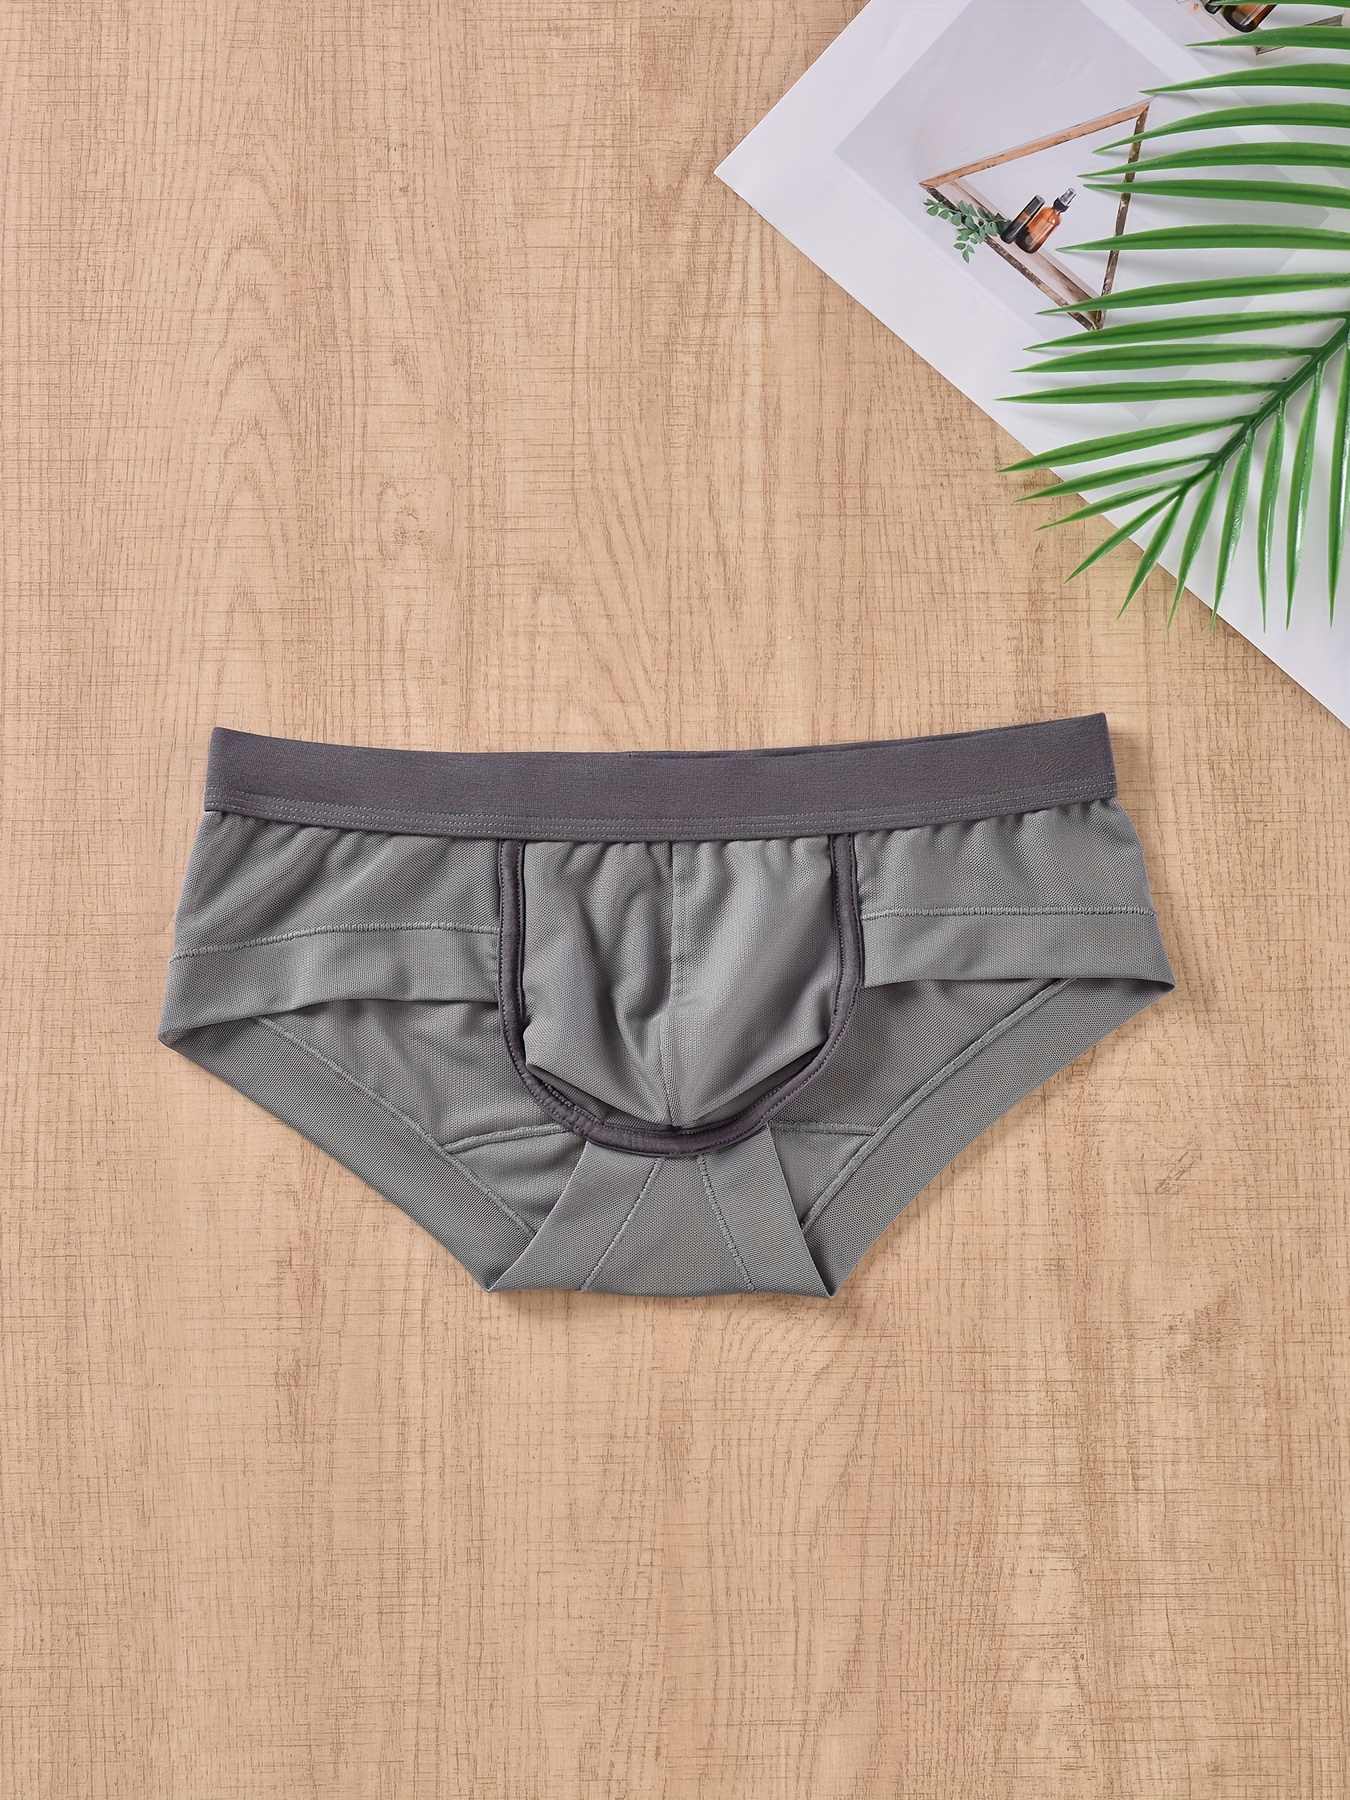 Underpants Panties Briefs Underwear Summer Cotton Men's Underwear